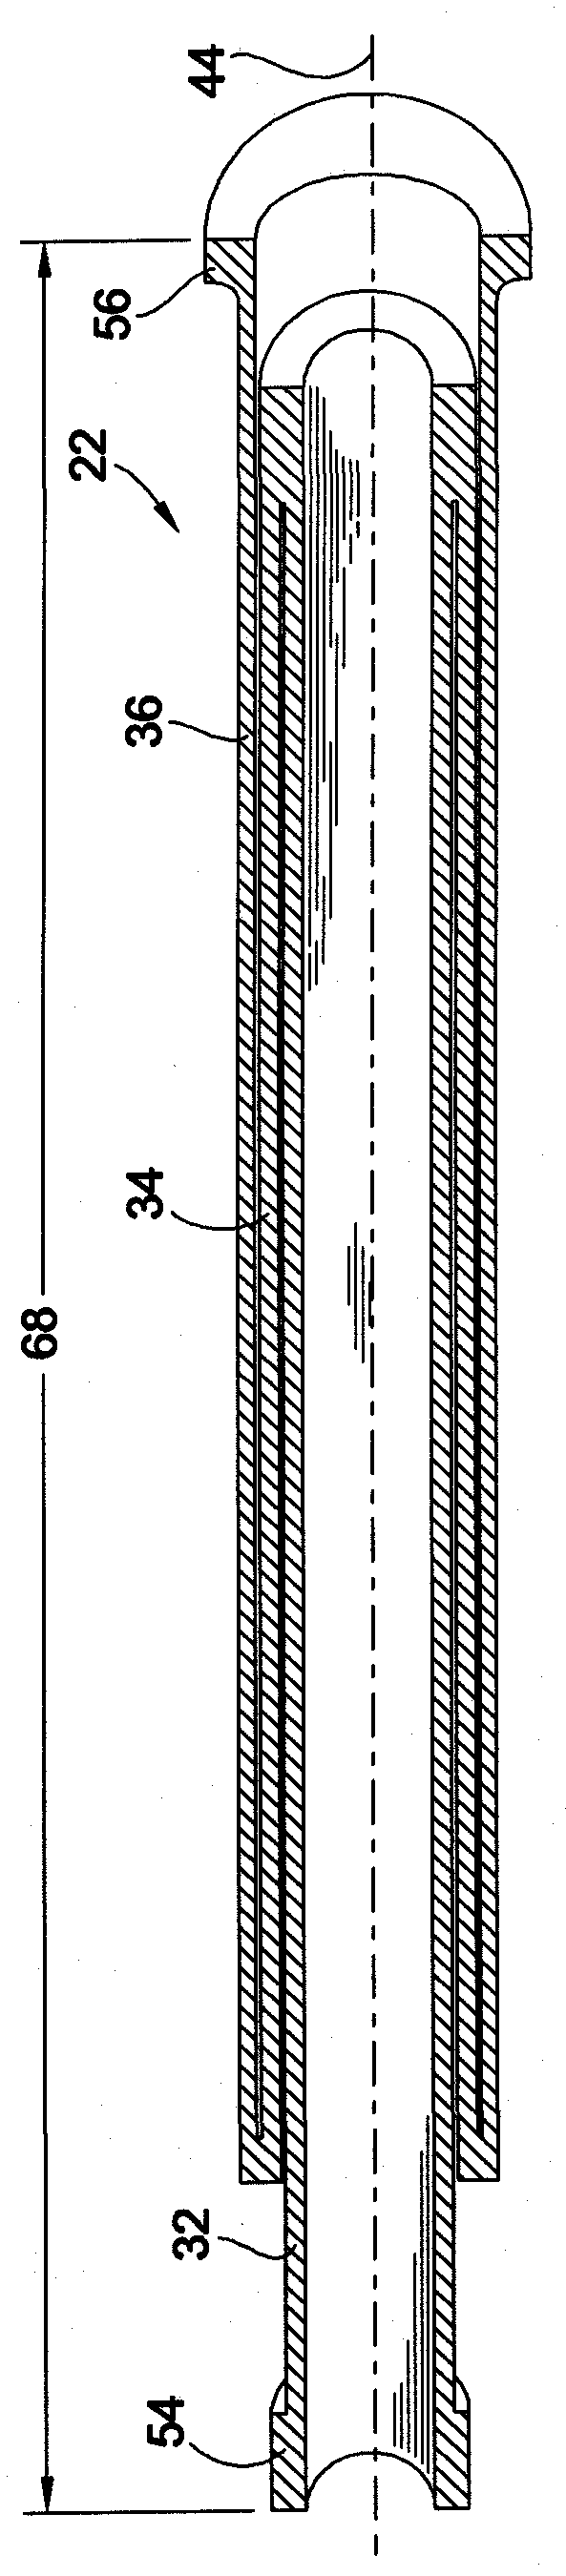 Multi-tubular fluid transfer conduit